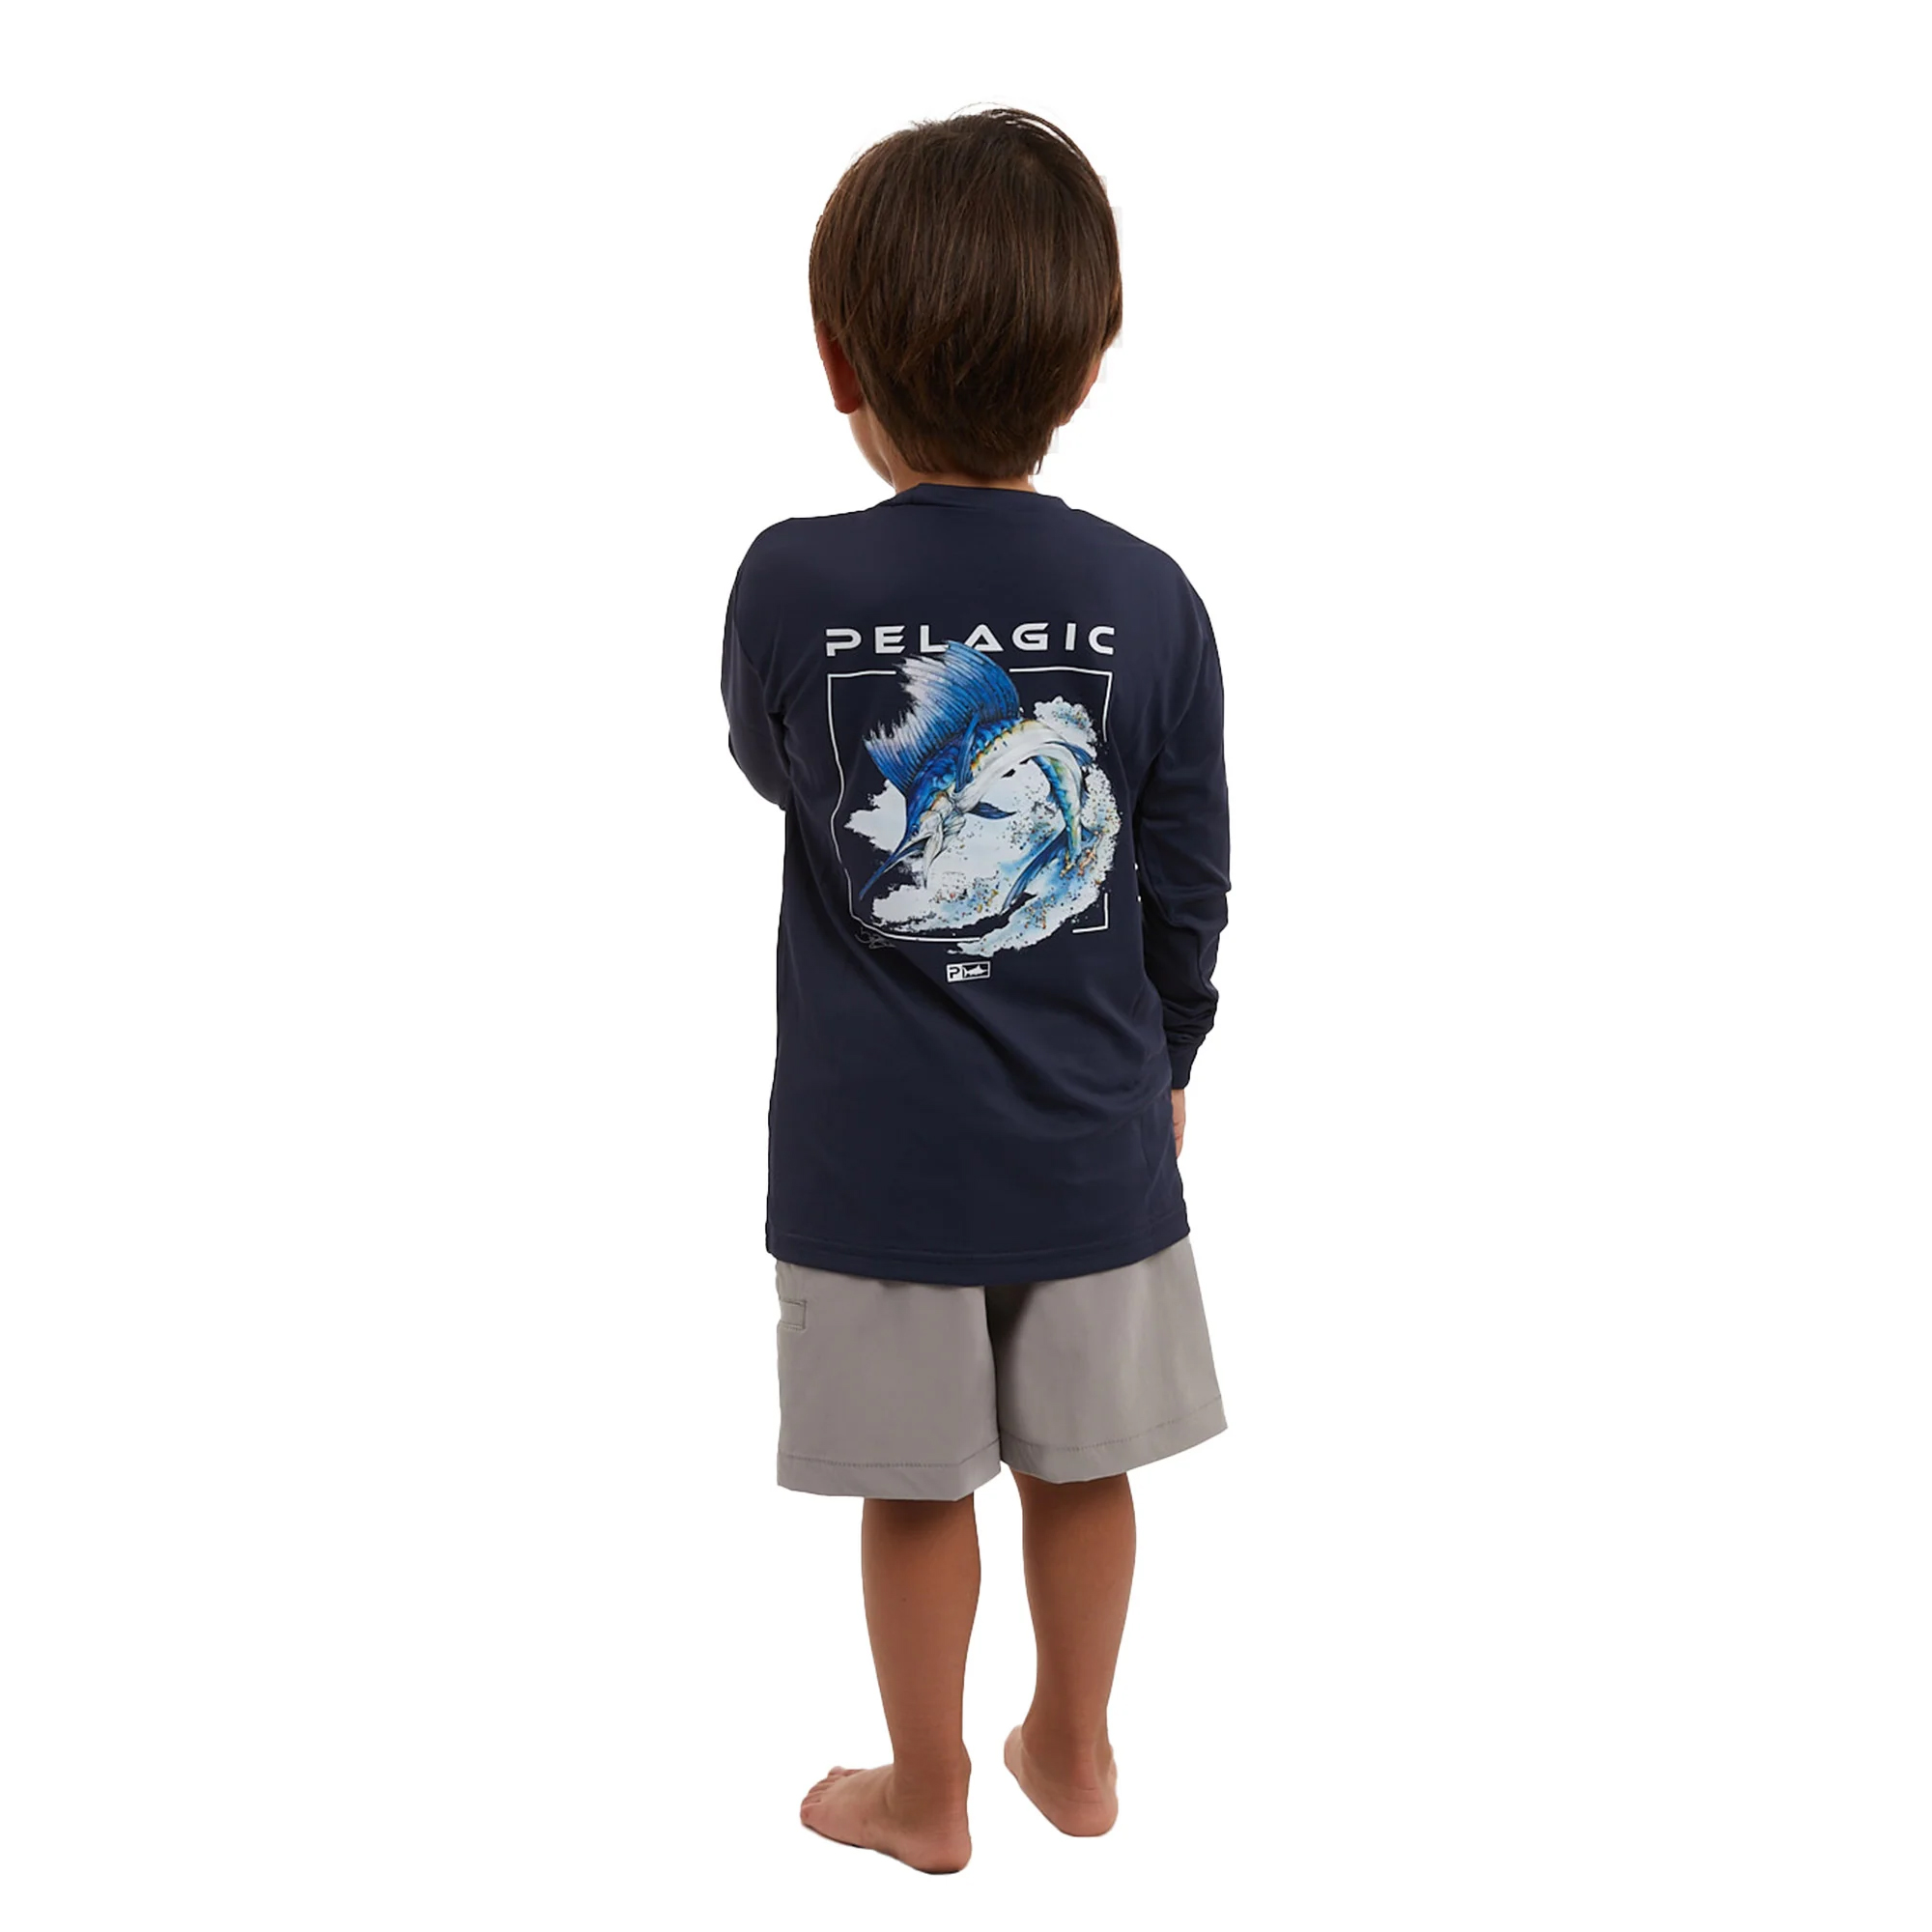 Pelagic Aquatek Sailfish Long Sleeve Performance Shirt